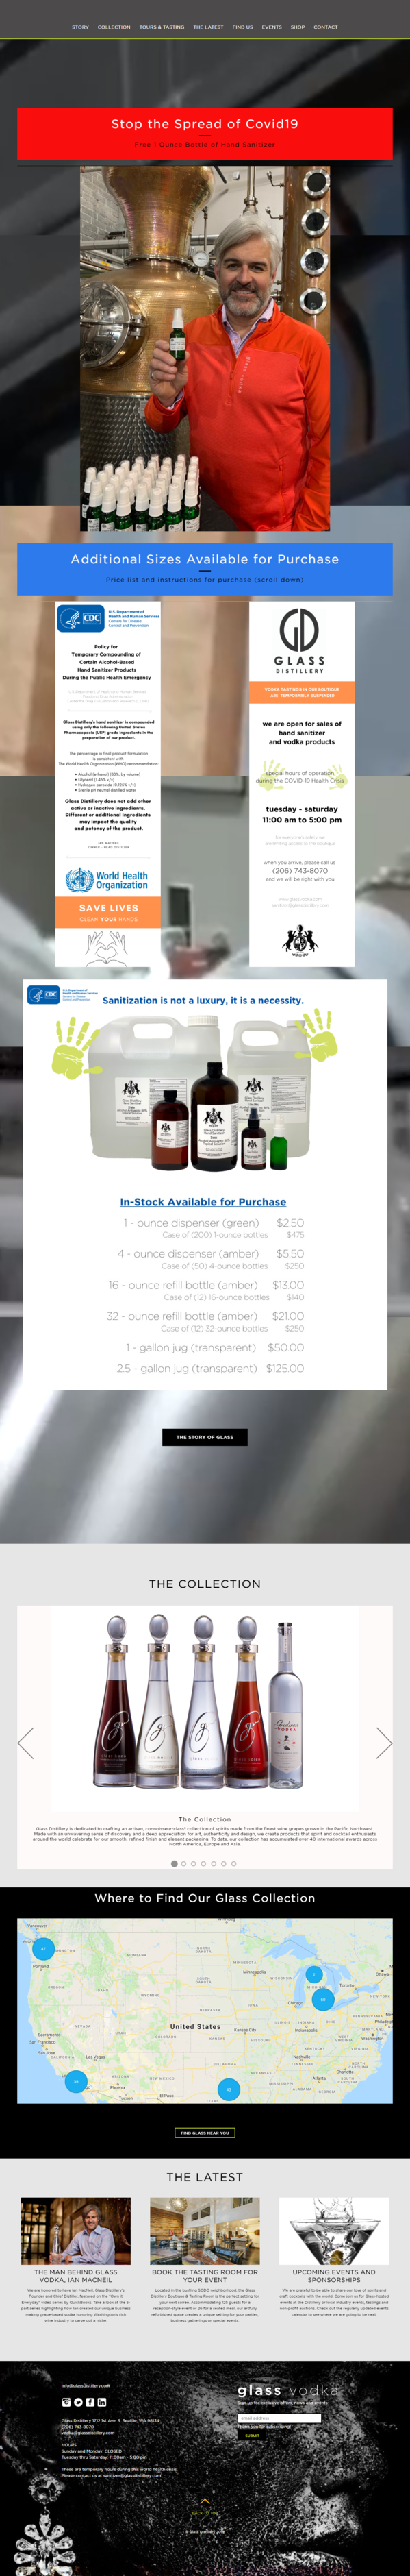 Glass Distillery - Premium Vodka Distilled From Washington Wine Grape_ - glassvodka.com.png